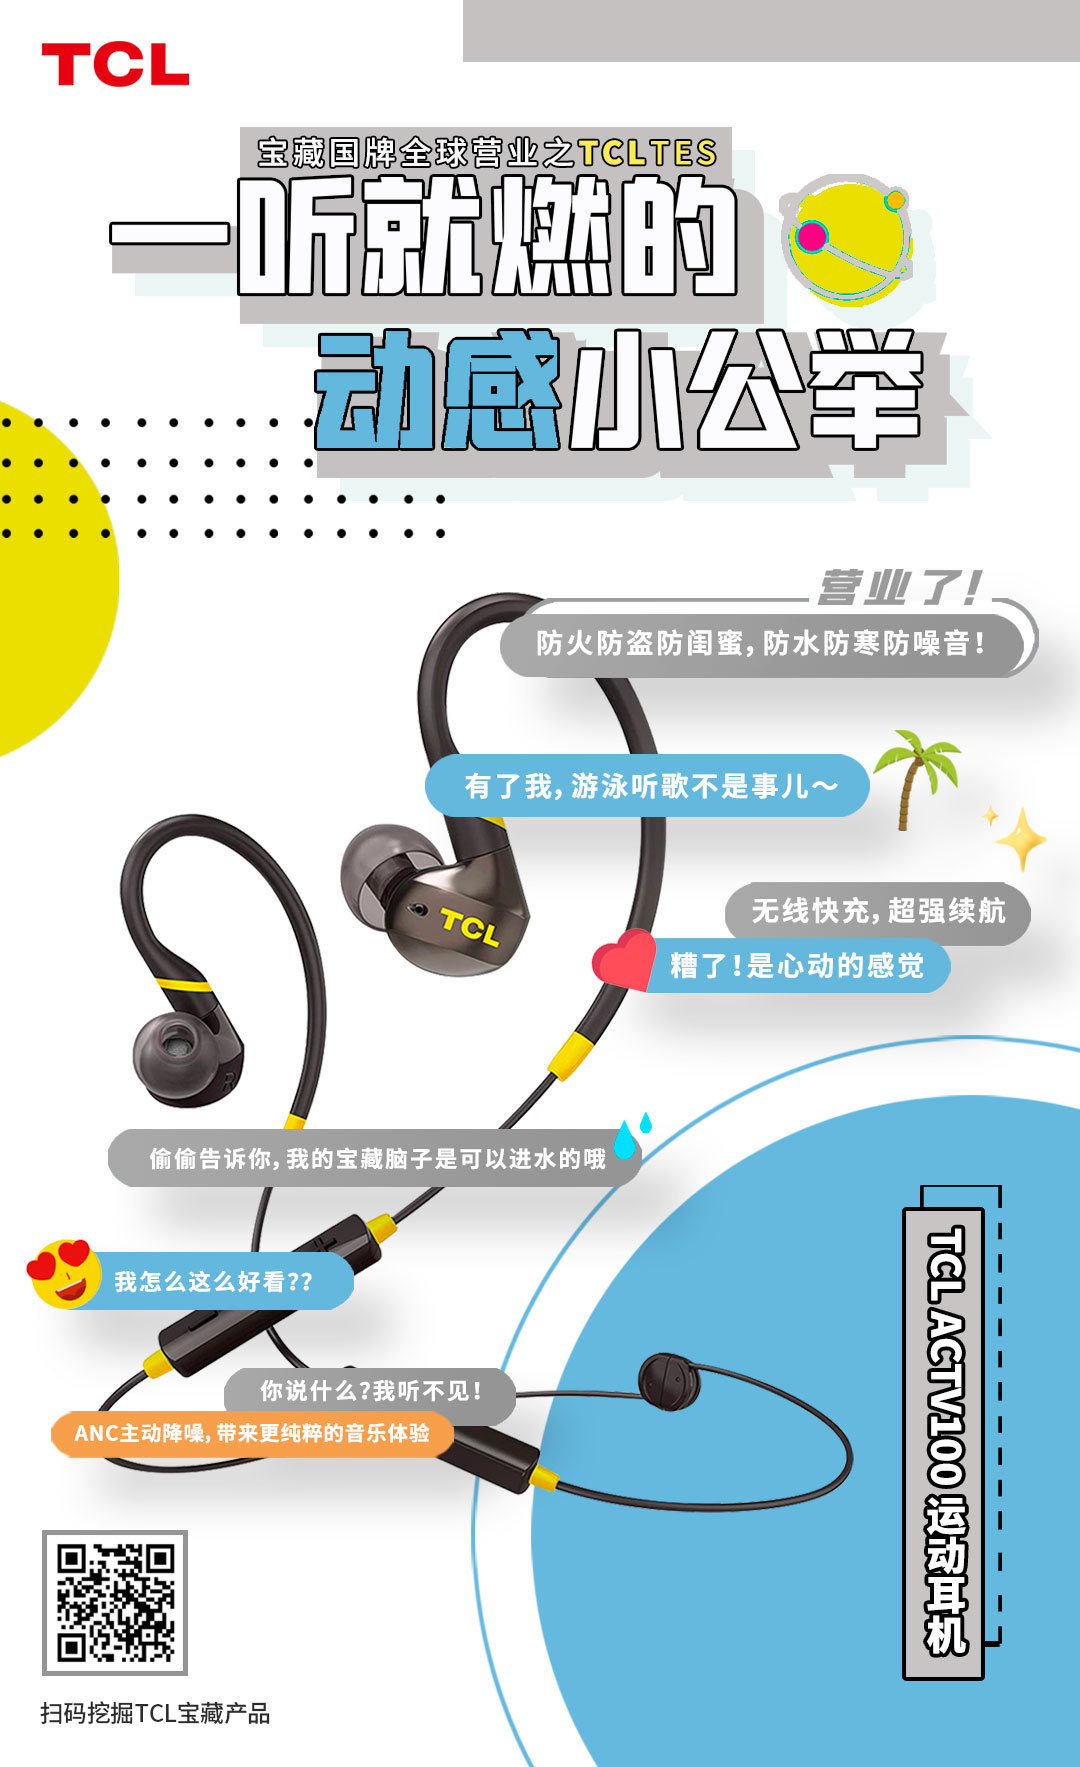 TCL｜大国品牌产品传播海报图3